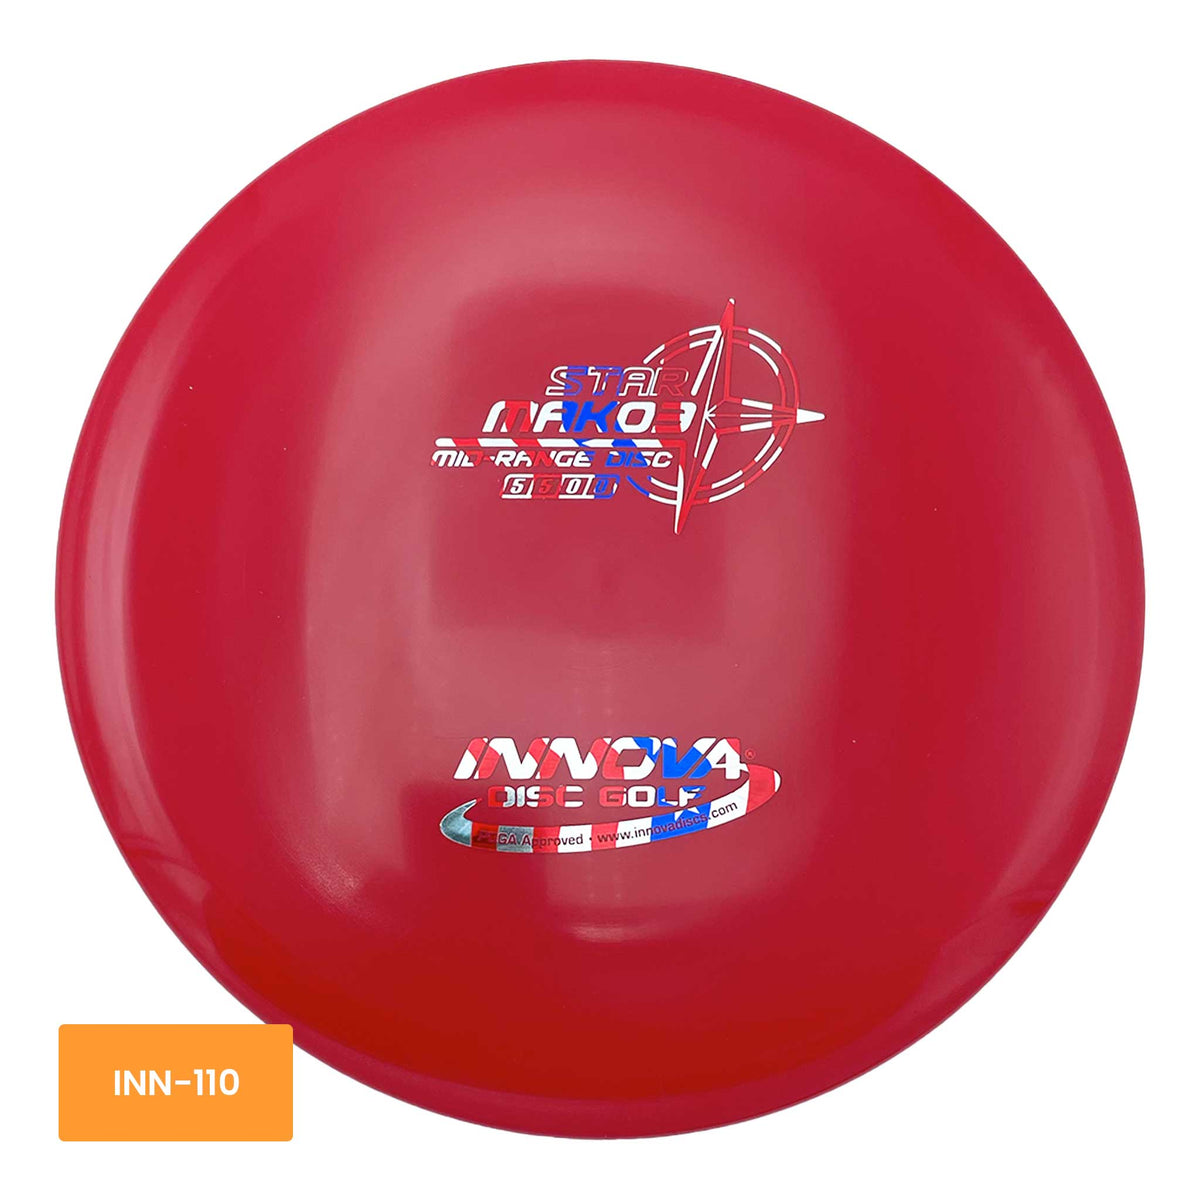 Innova Disc golf Star Mako3 midrange - Red